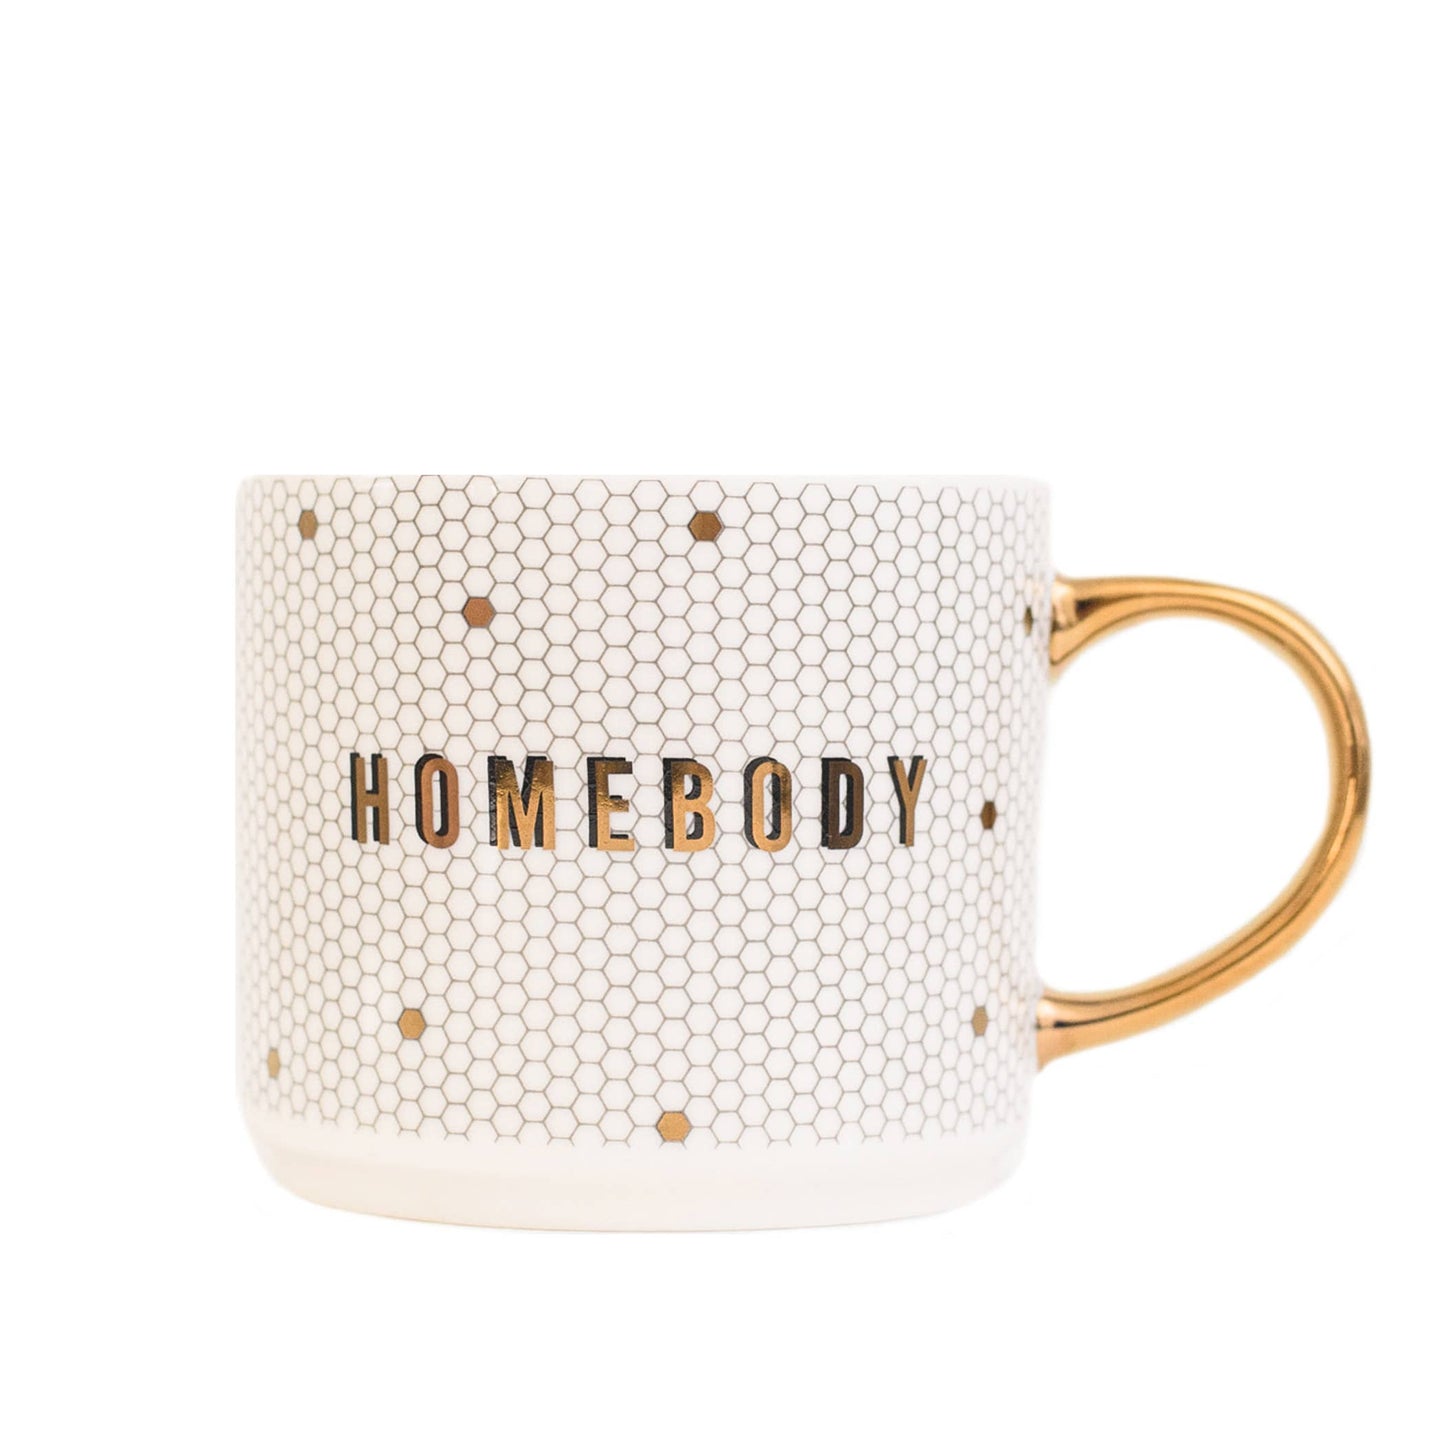 Homebody Gold Tile Coffee Mug - Gifts & Home Decor